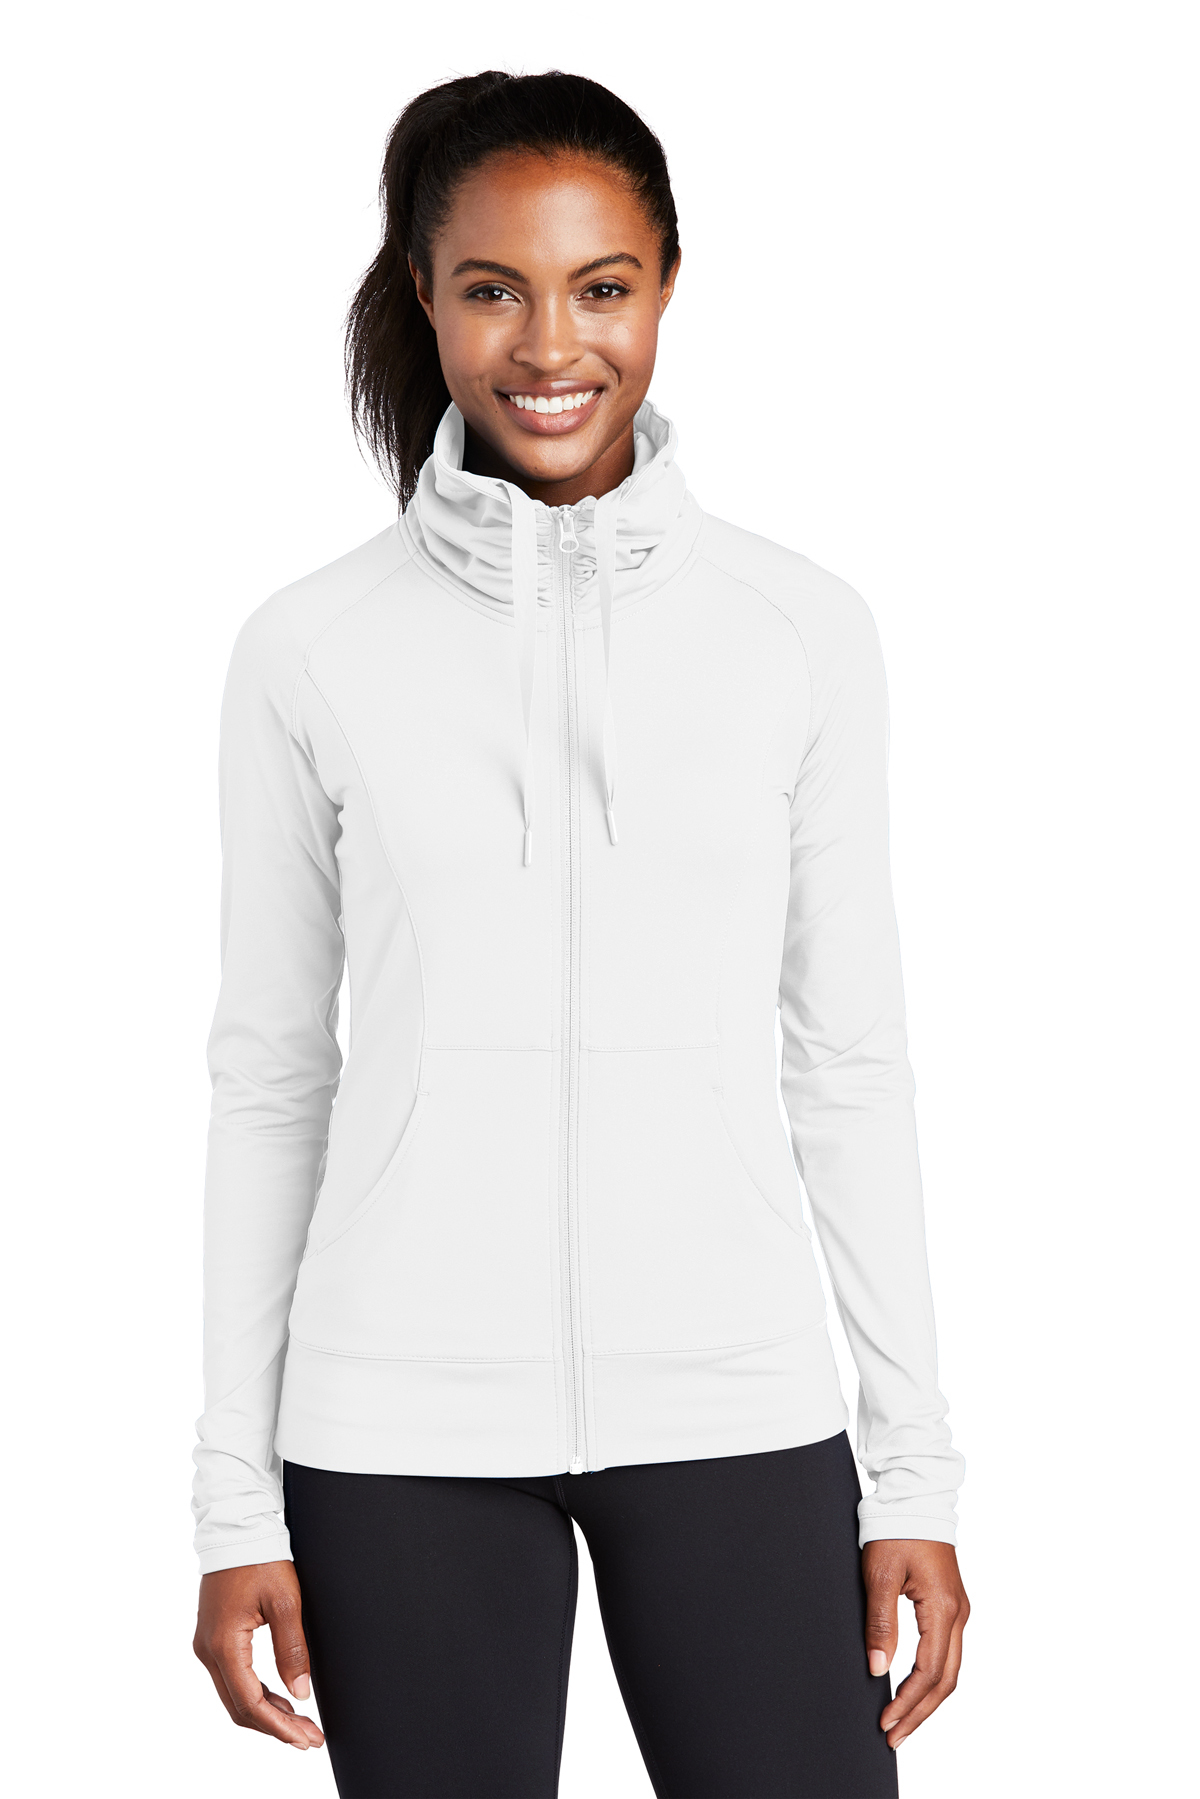 Sport-Tek Ladies Sport-Wick Stretch Full-Zip Jacket | Product | Company ...